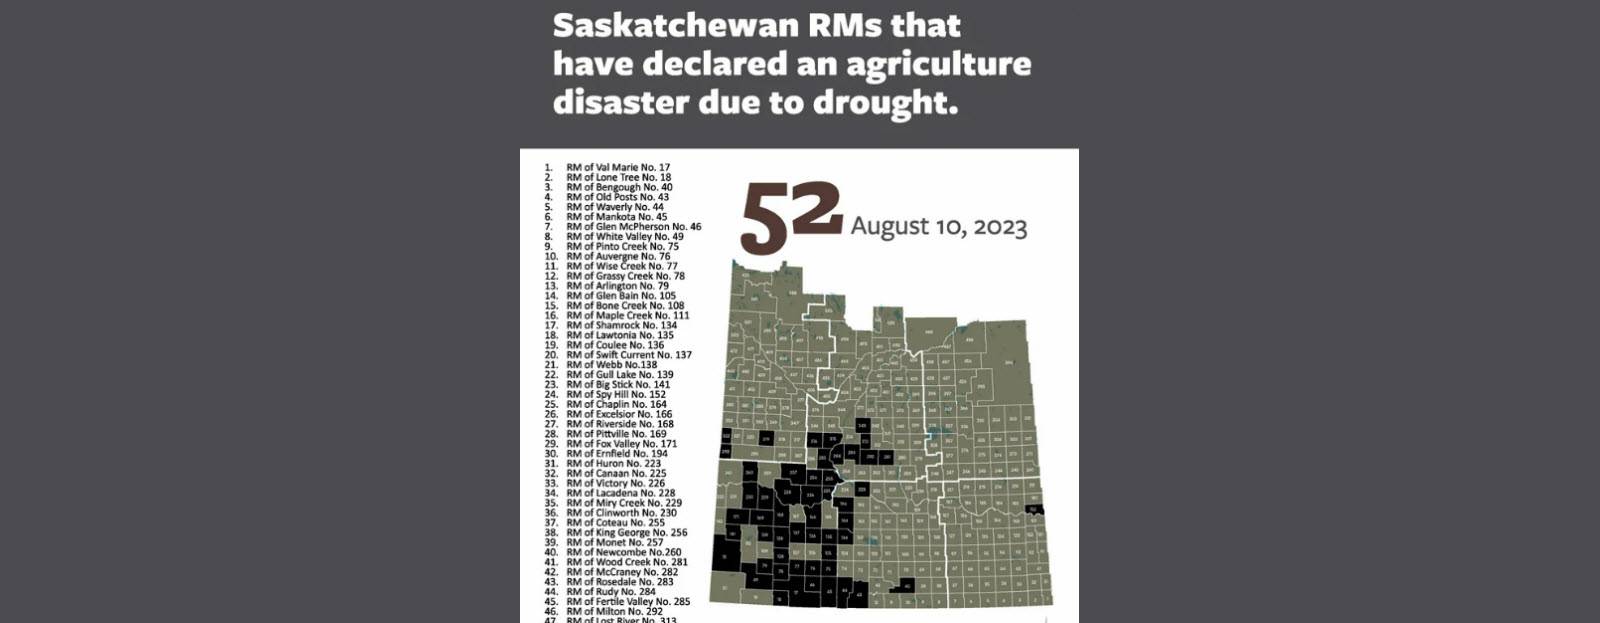 52 Saskatchewan Rural Municipalities have declared agriculture disaster